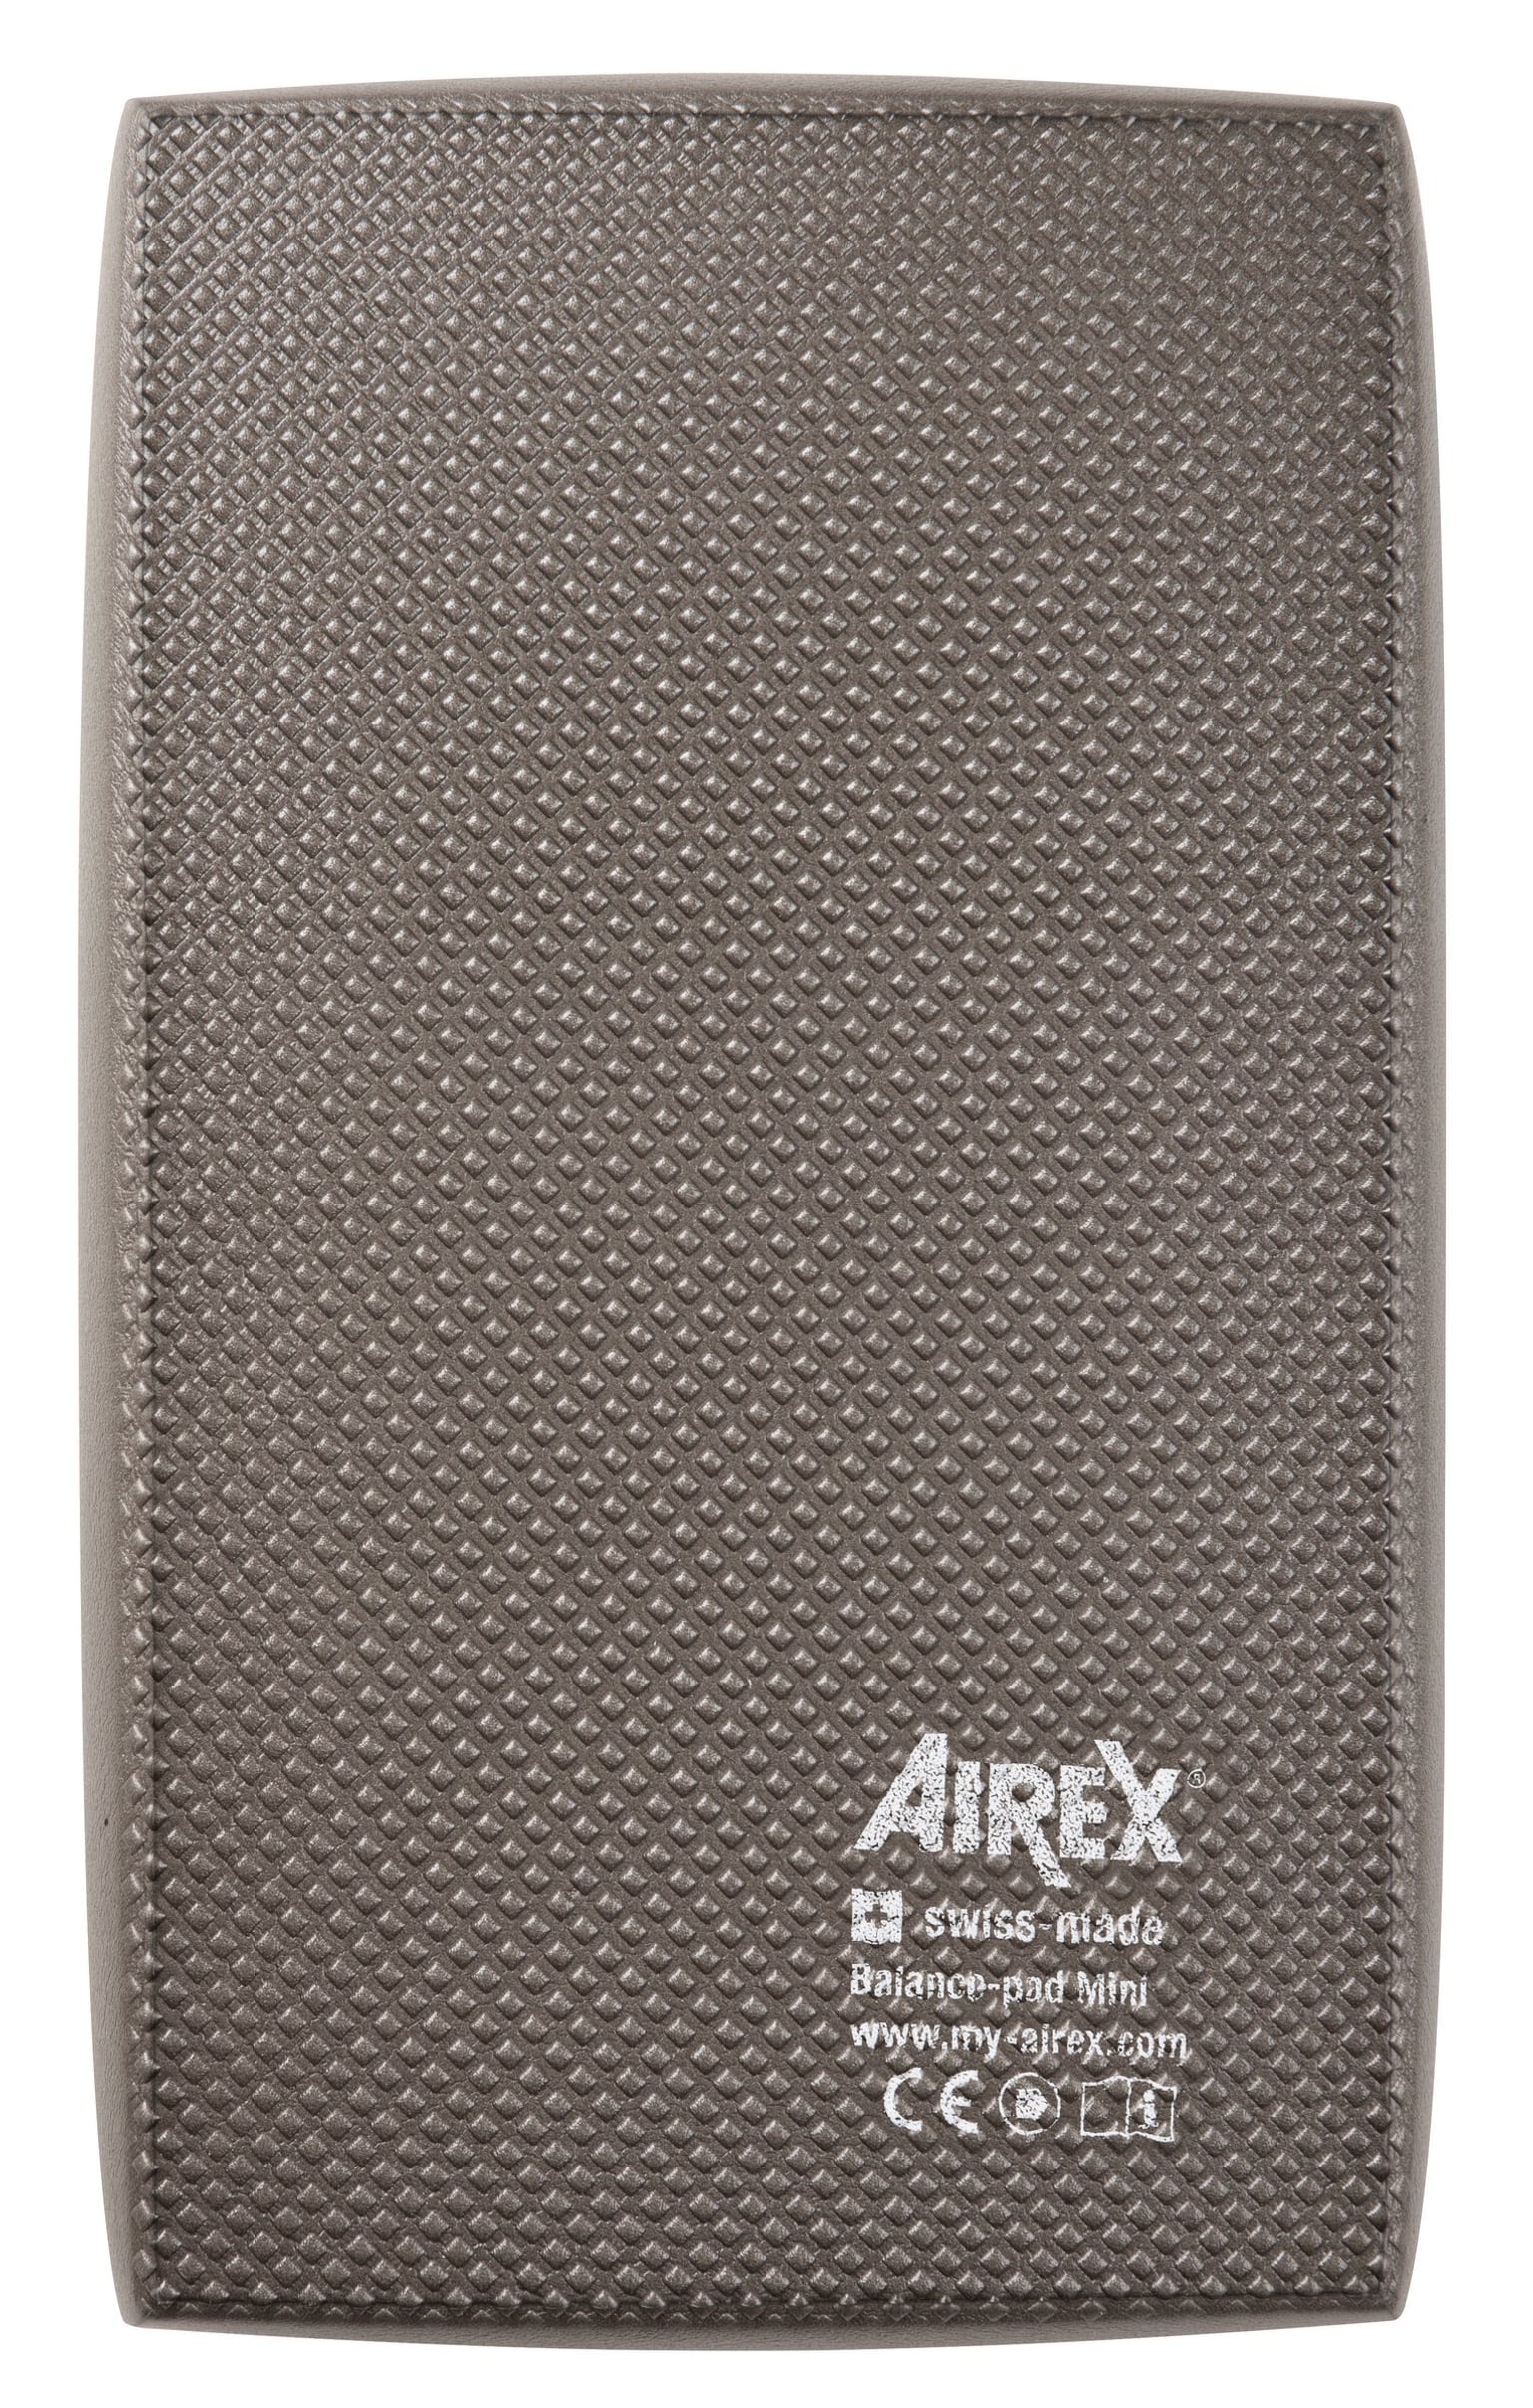 Airex Airex Balance Pad Mini Allenatore di equilibrio 4